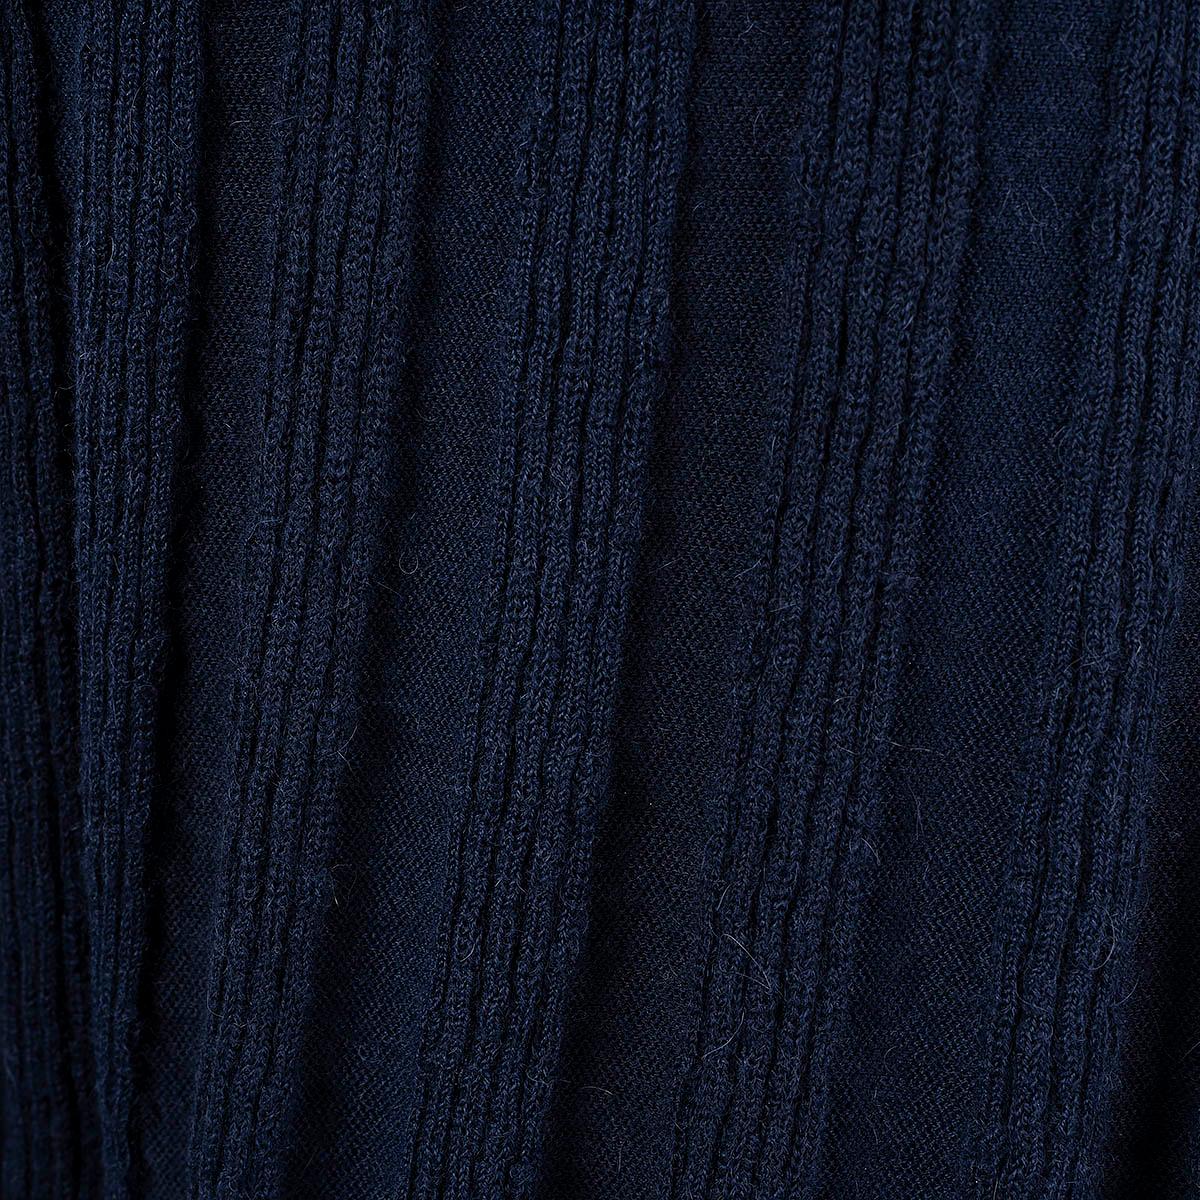 CHANEL navy blue alpaca & wool 2018 18B TEXTURED KNIT Dress 36 XS For Sale 4